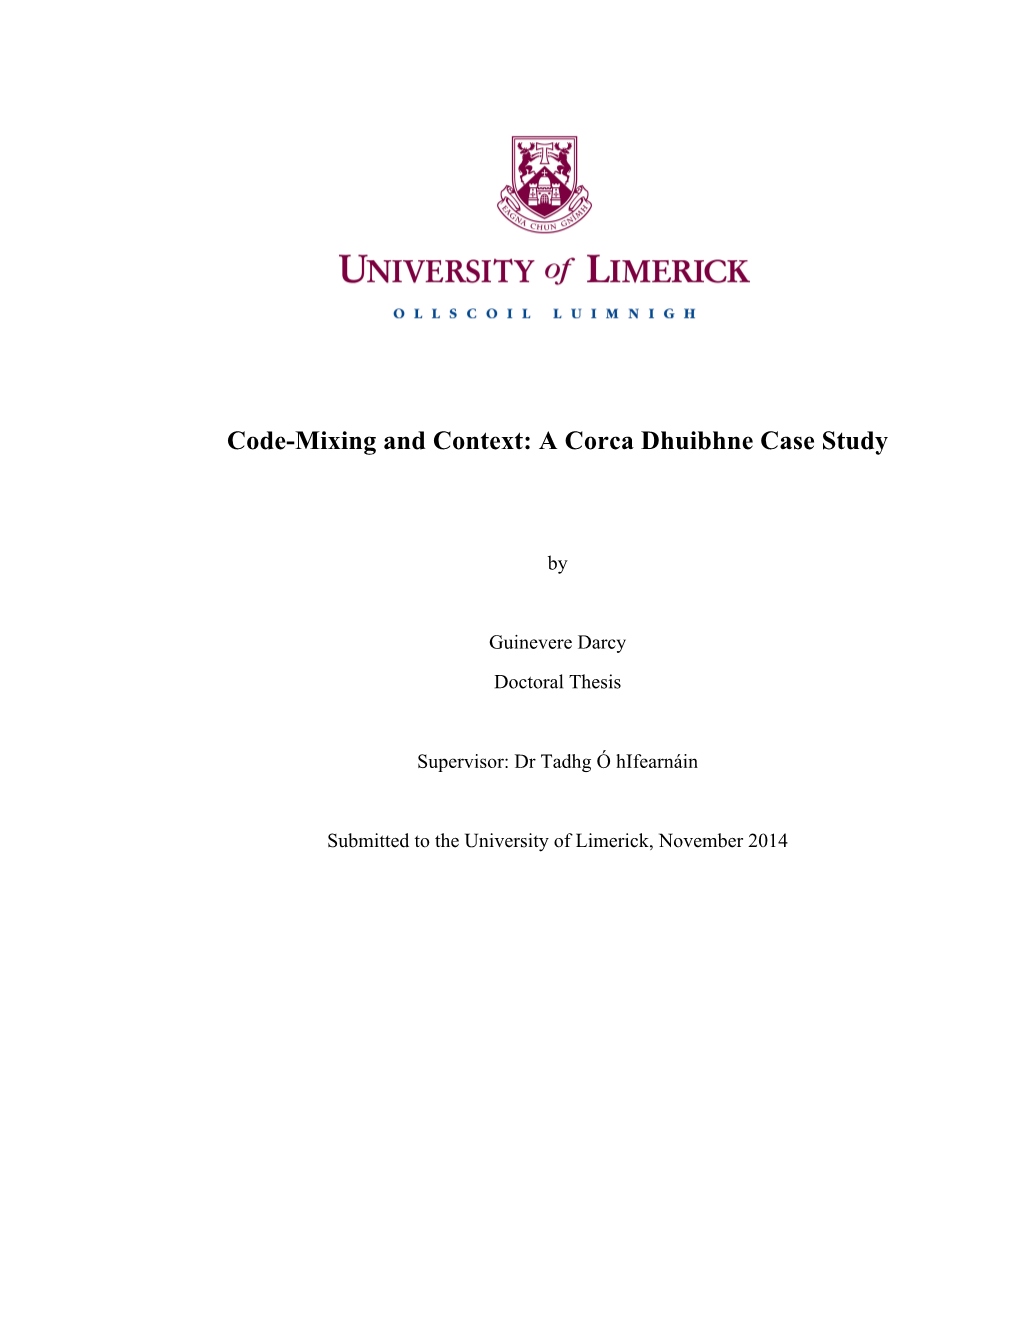 Code-Mixing and Context: a Corca Dhuibhne Case Study